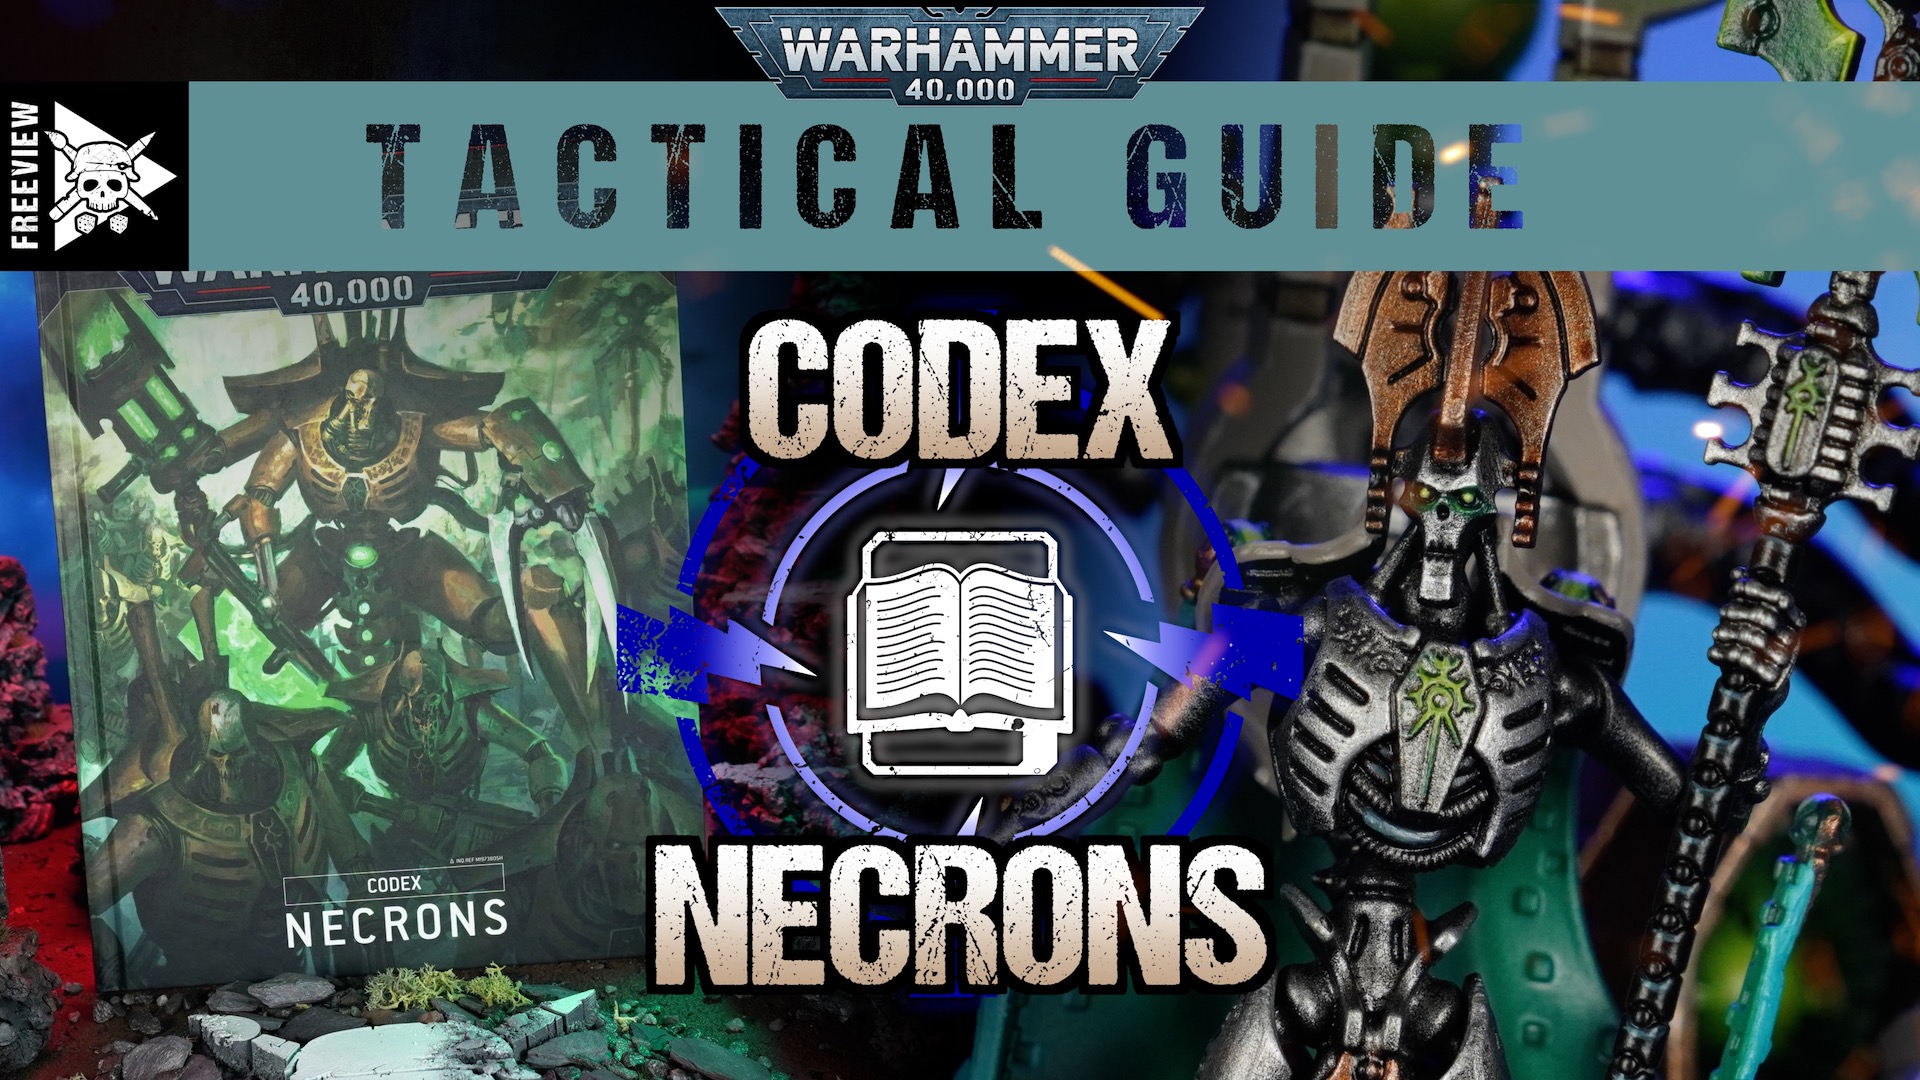 Warhammer 40k Necrons Immortals / Deathmarks - Guardian Games